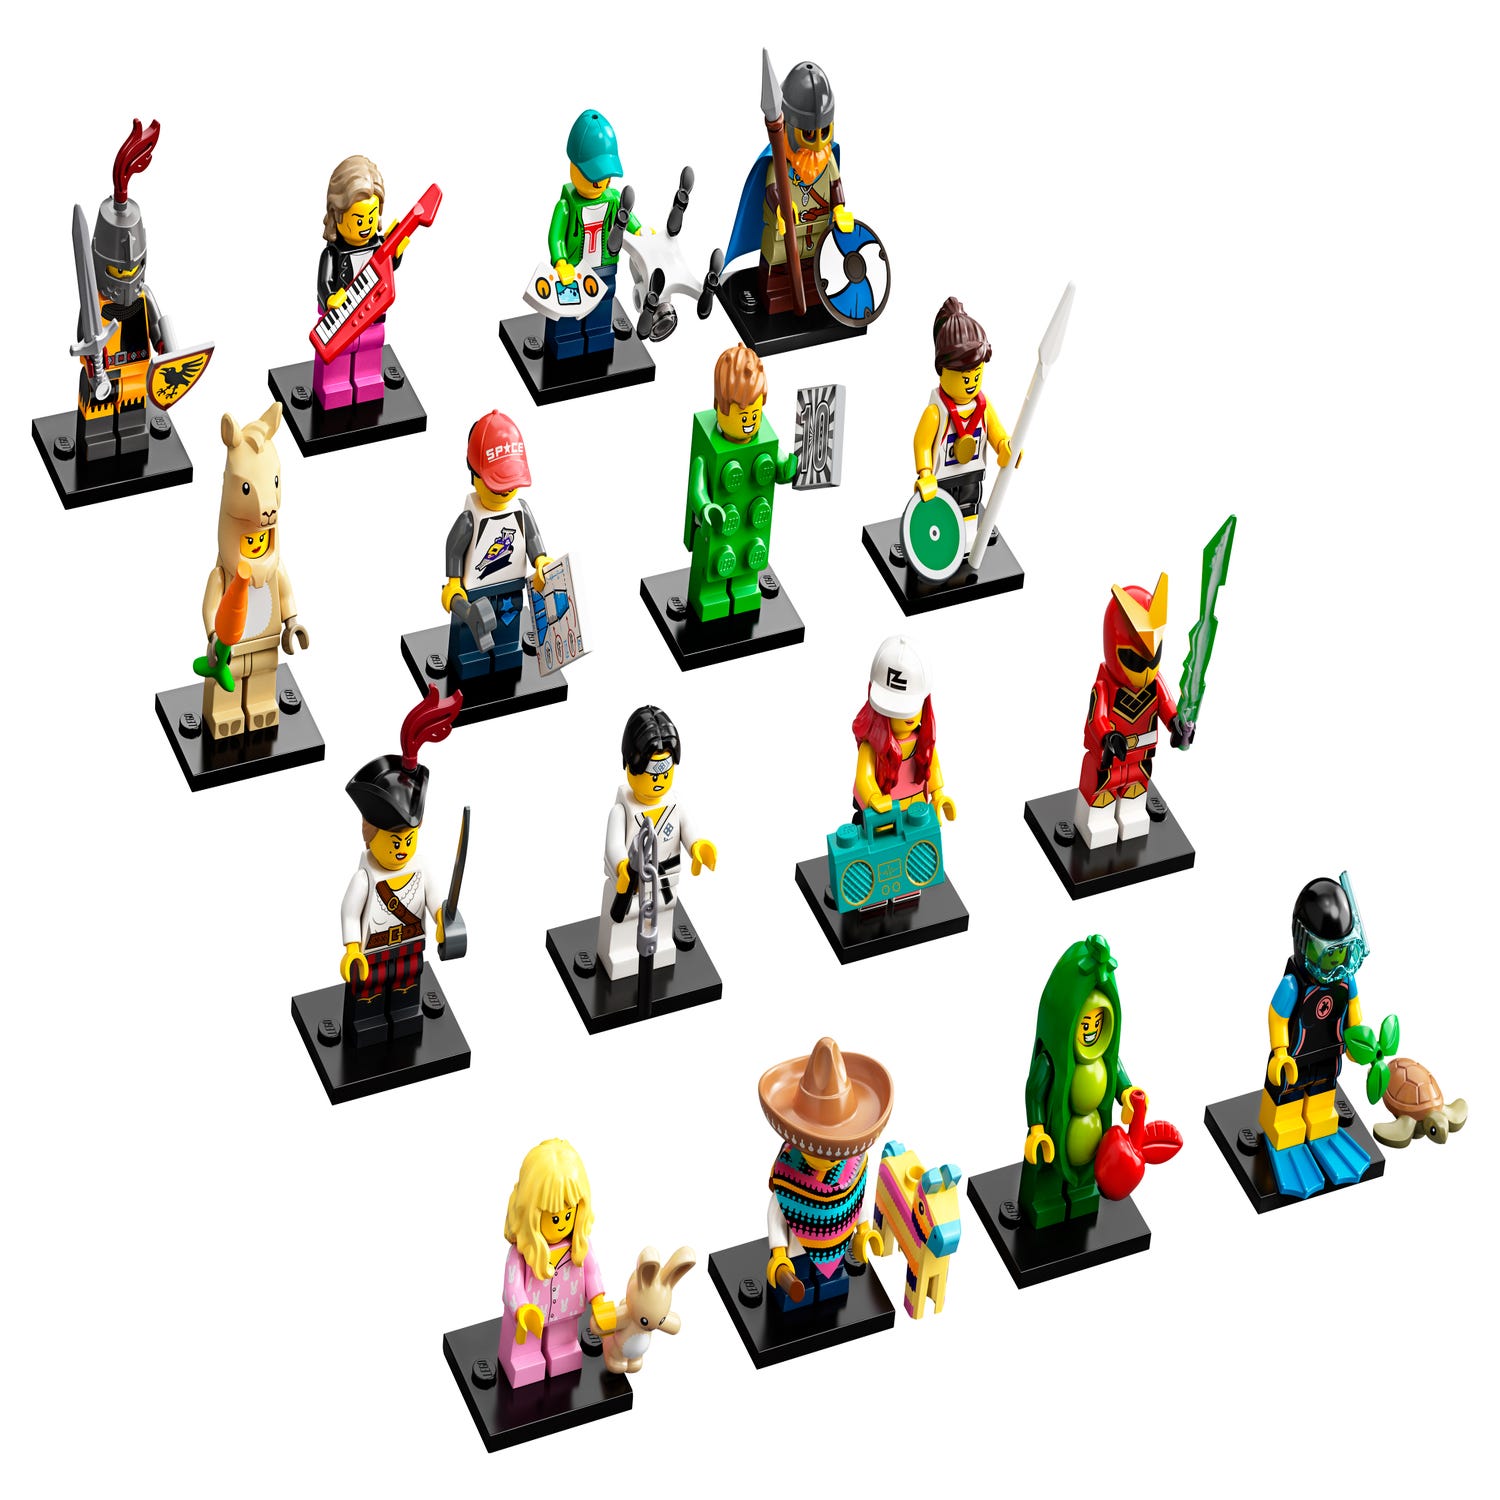 Lego Minifigure Collection - Athletes